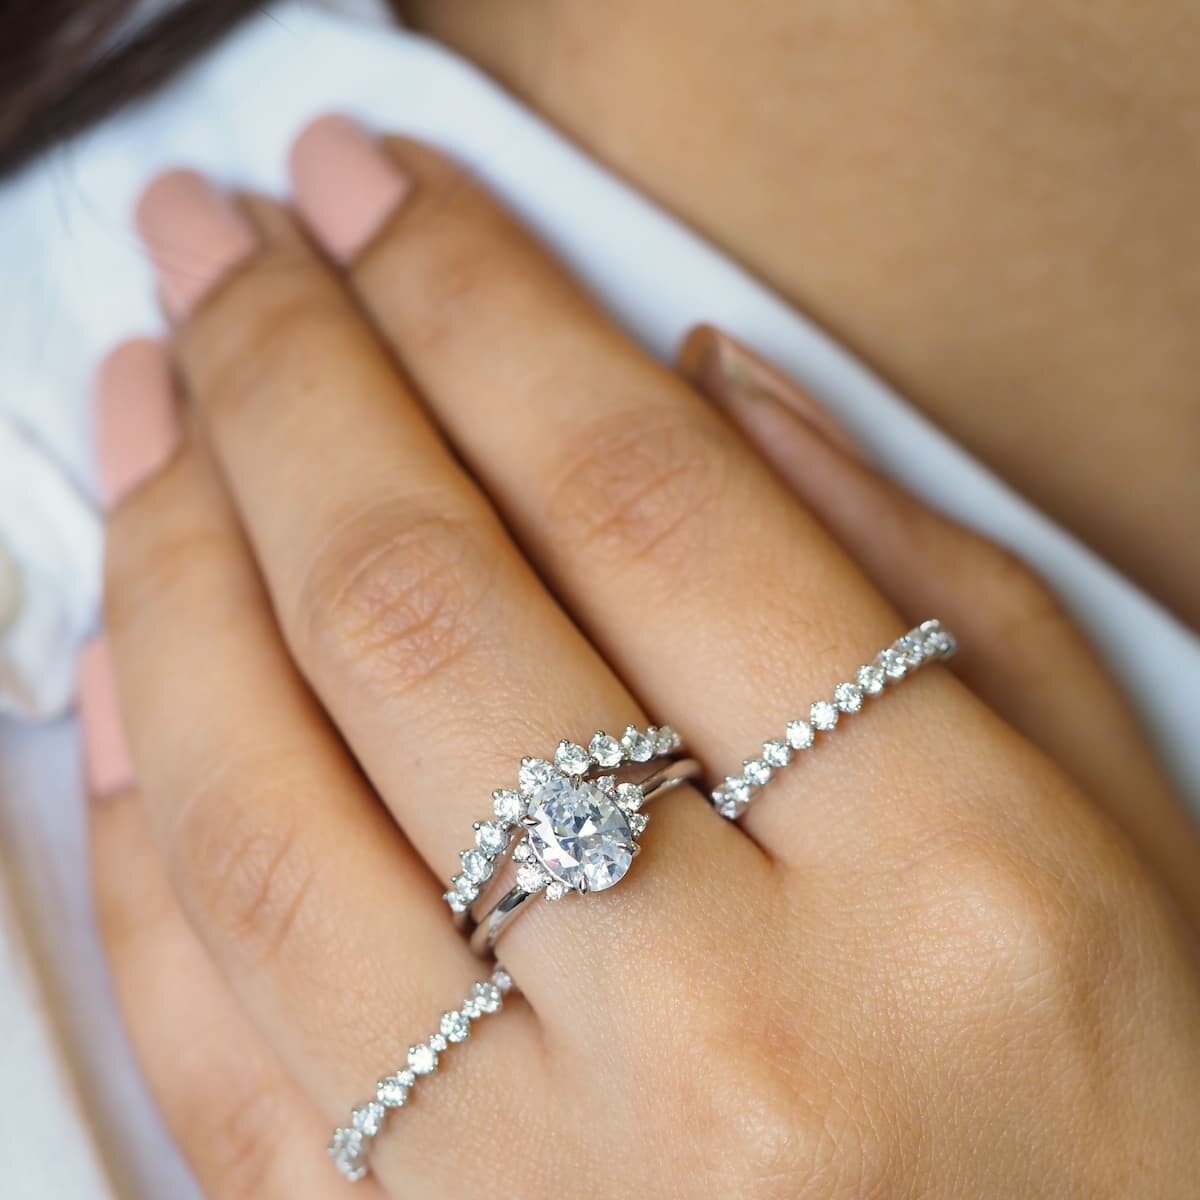 Sophia Diamond Engagement Ring (2 Carat) -14k White Gold